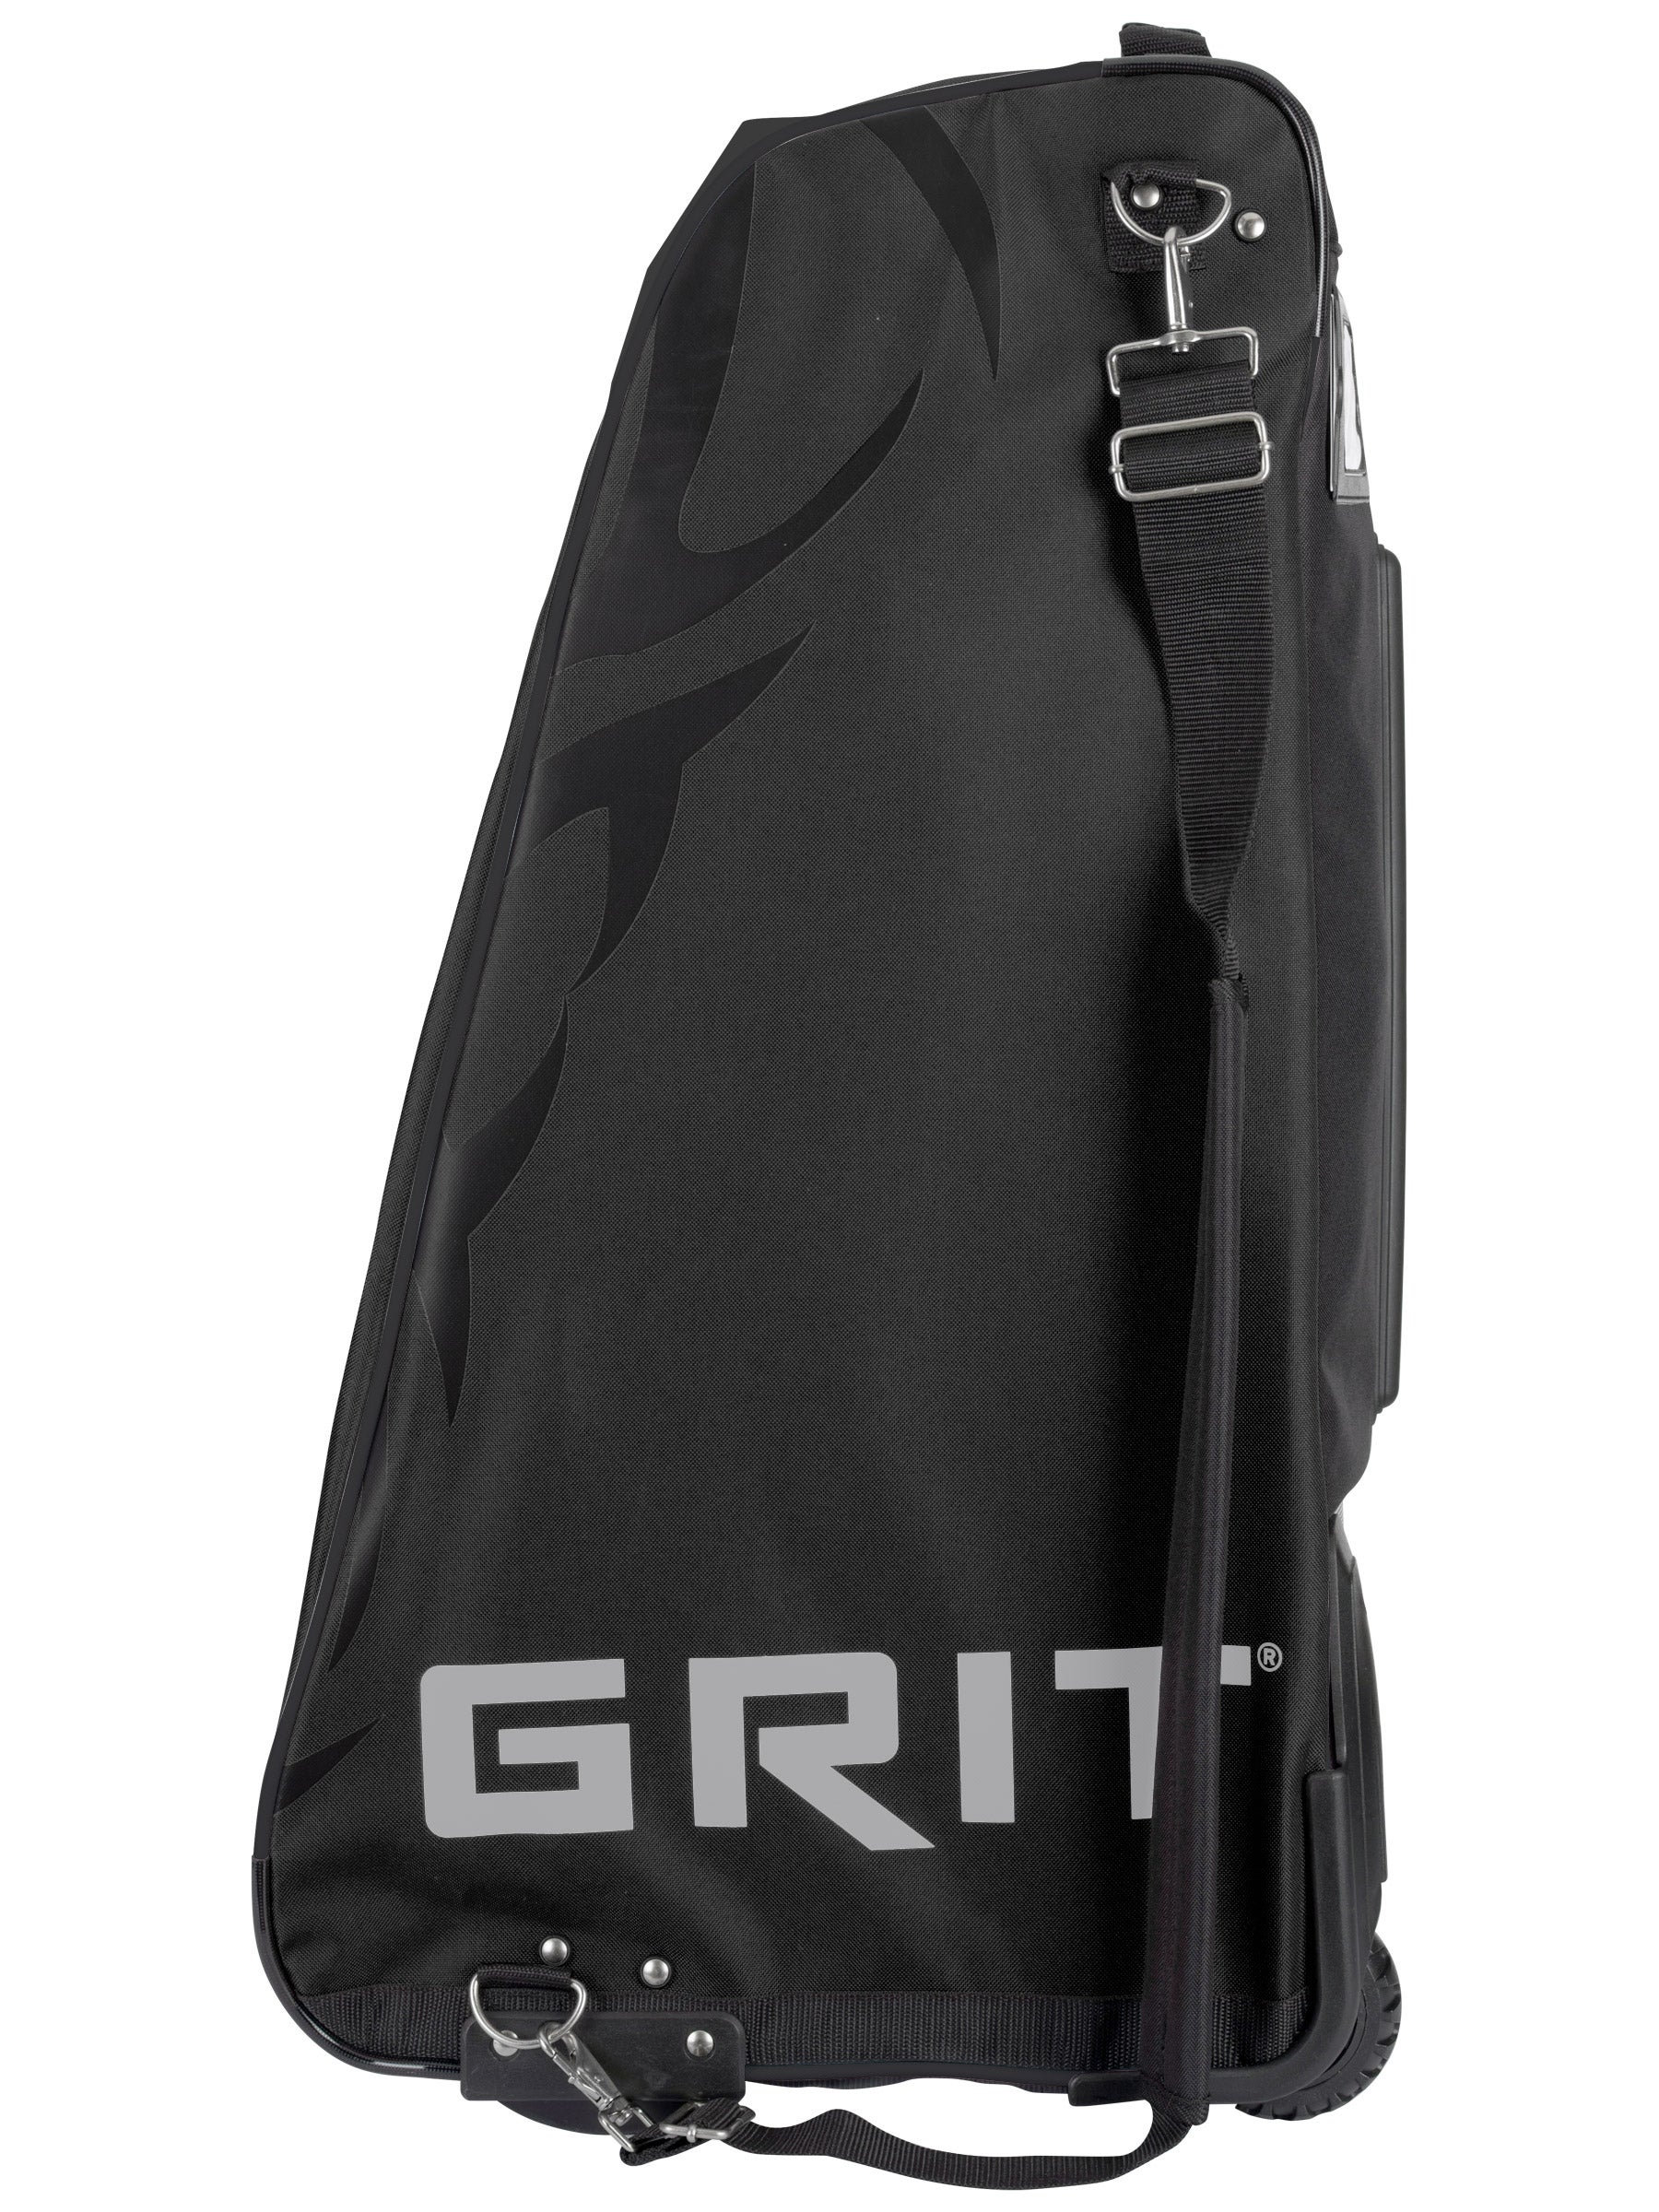 Grit Inc HYFX Junior Hockey Tower 30" Wheeled Equipment Bag Diva HYFX-030-DI